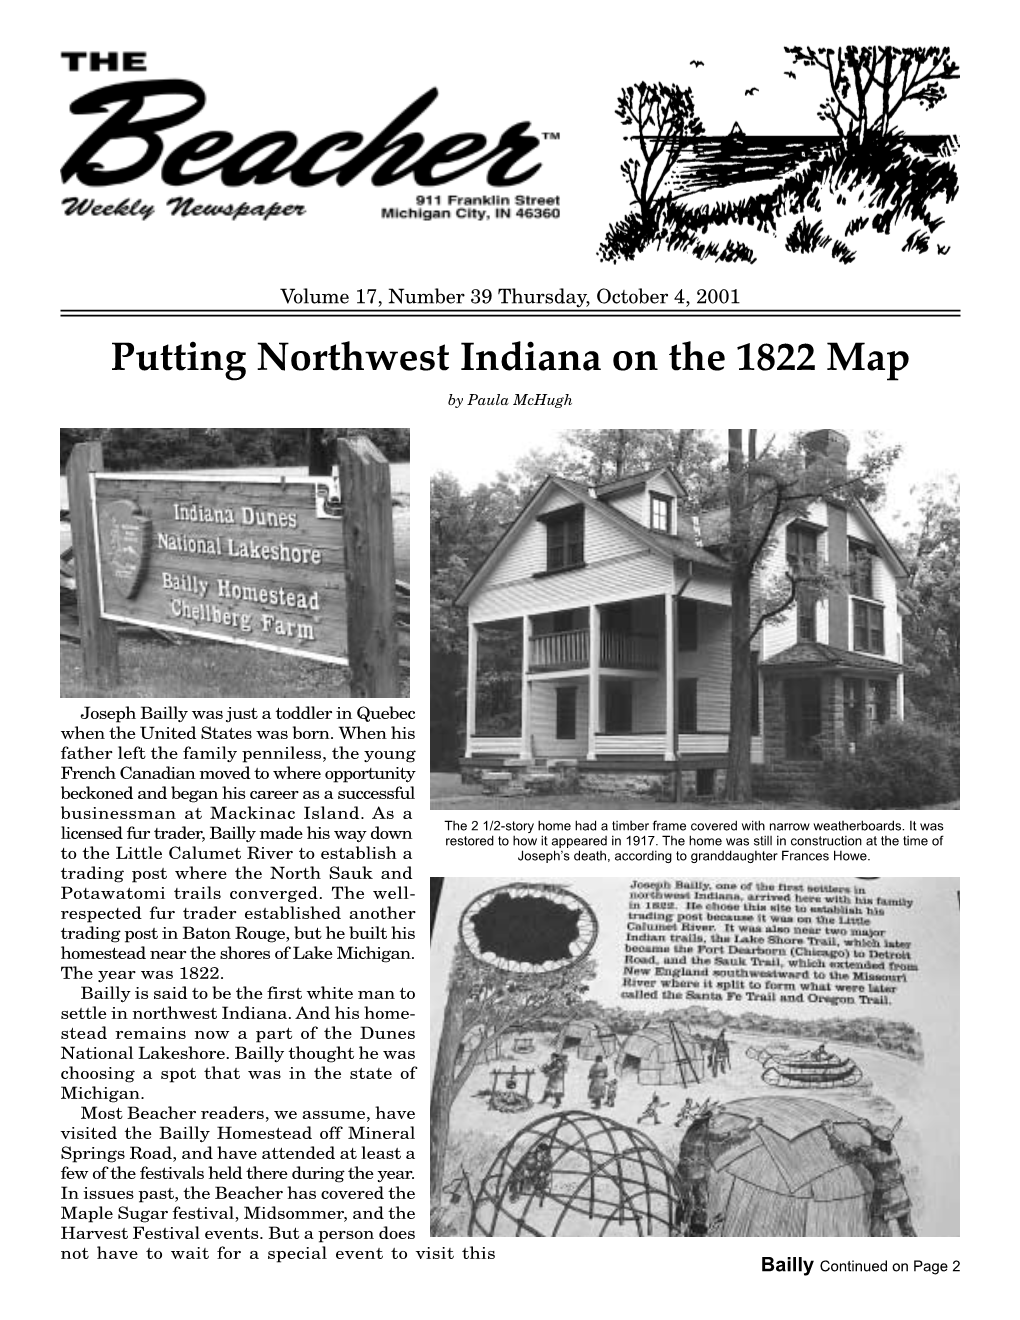 Putting Northwest Indiana on the 1822 Map by Paula Mchugh